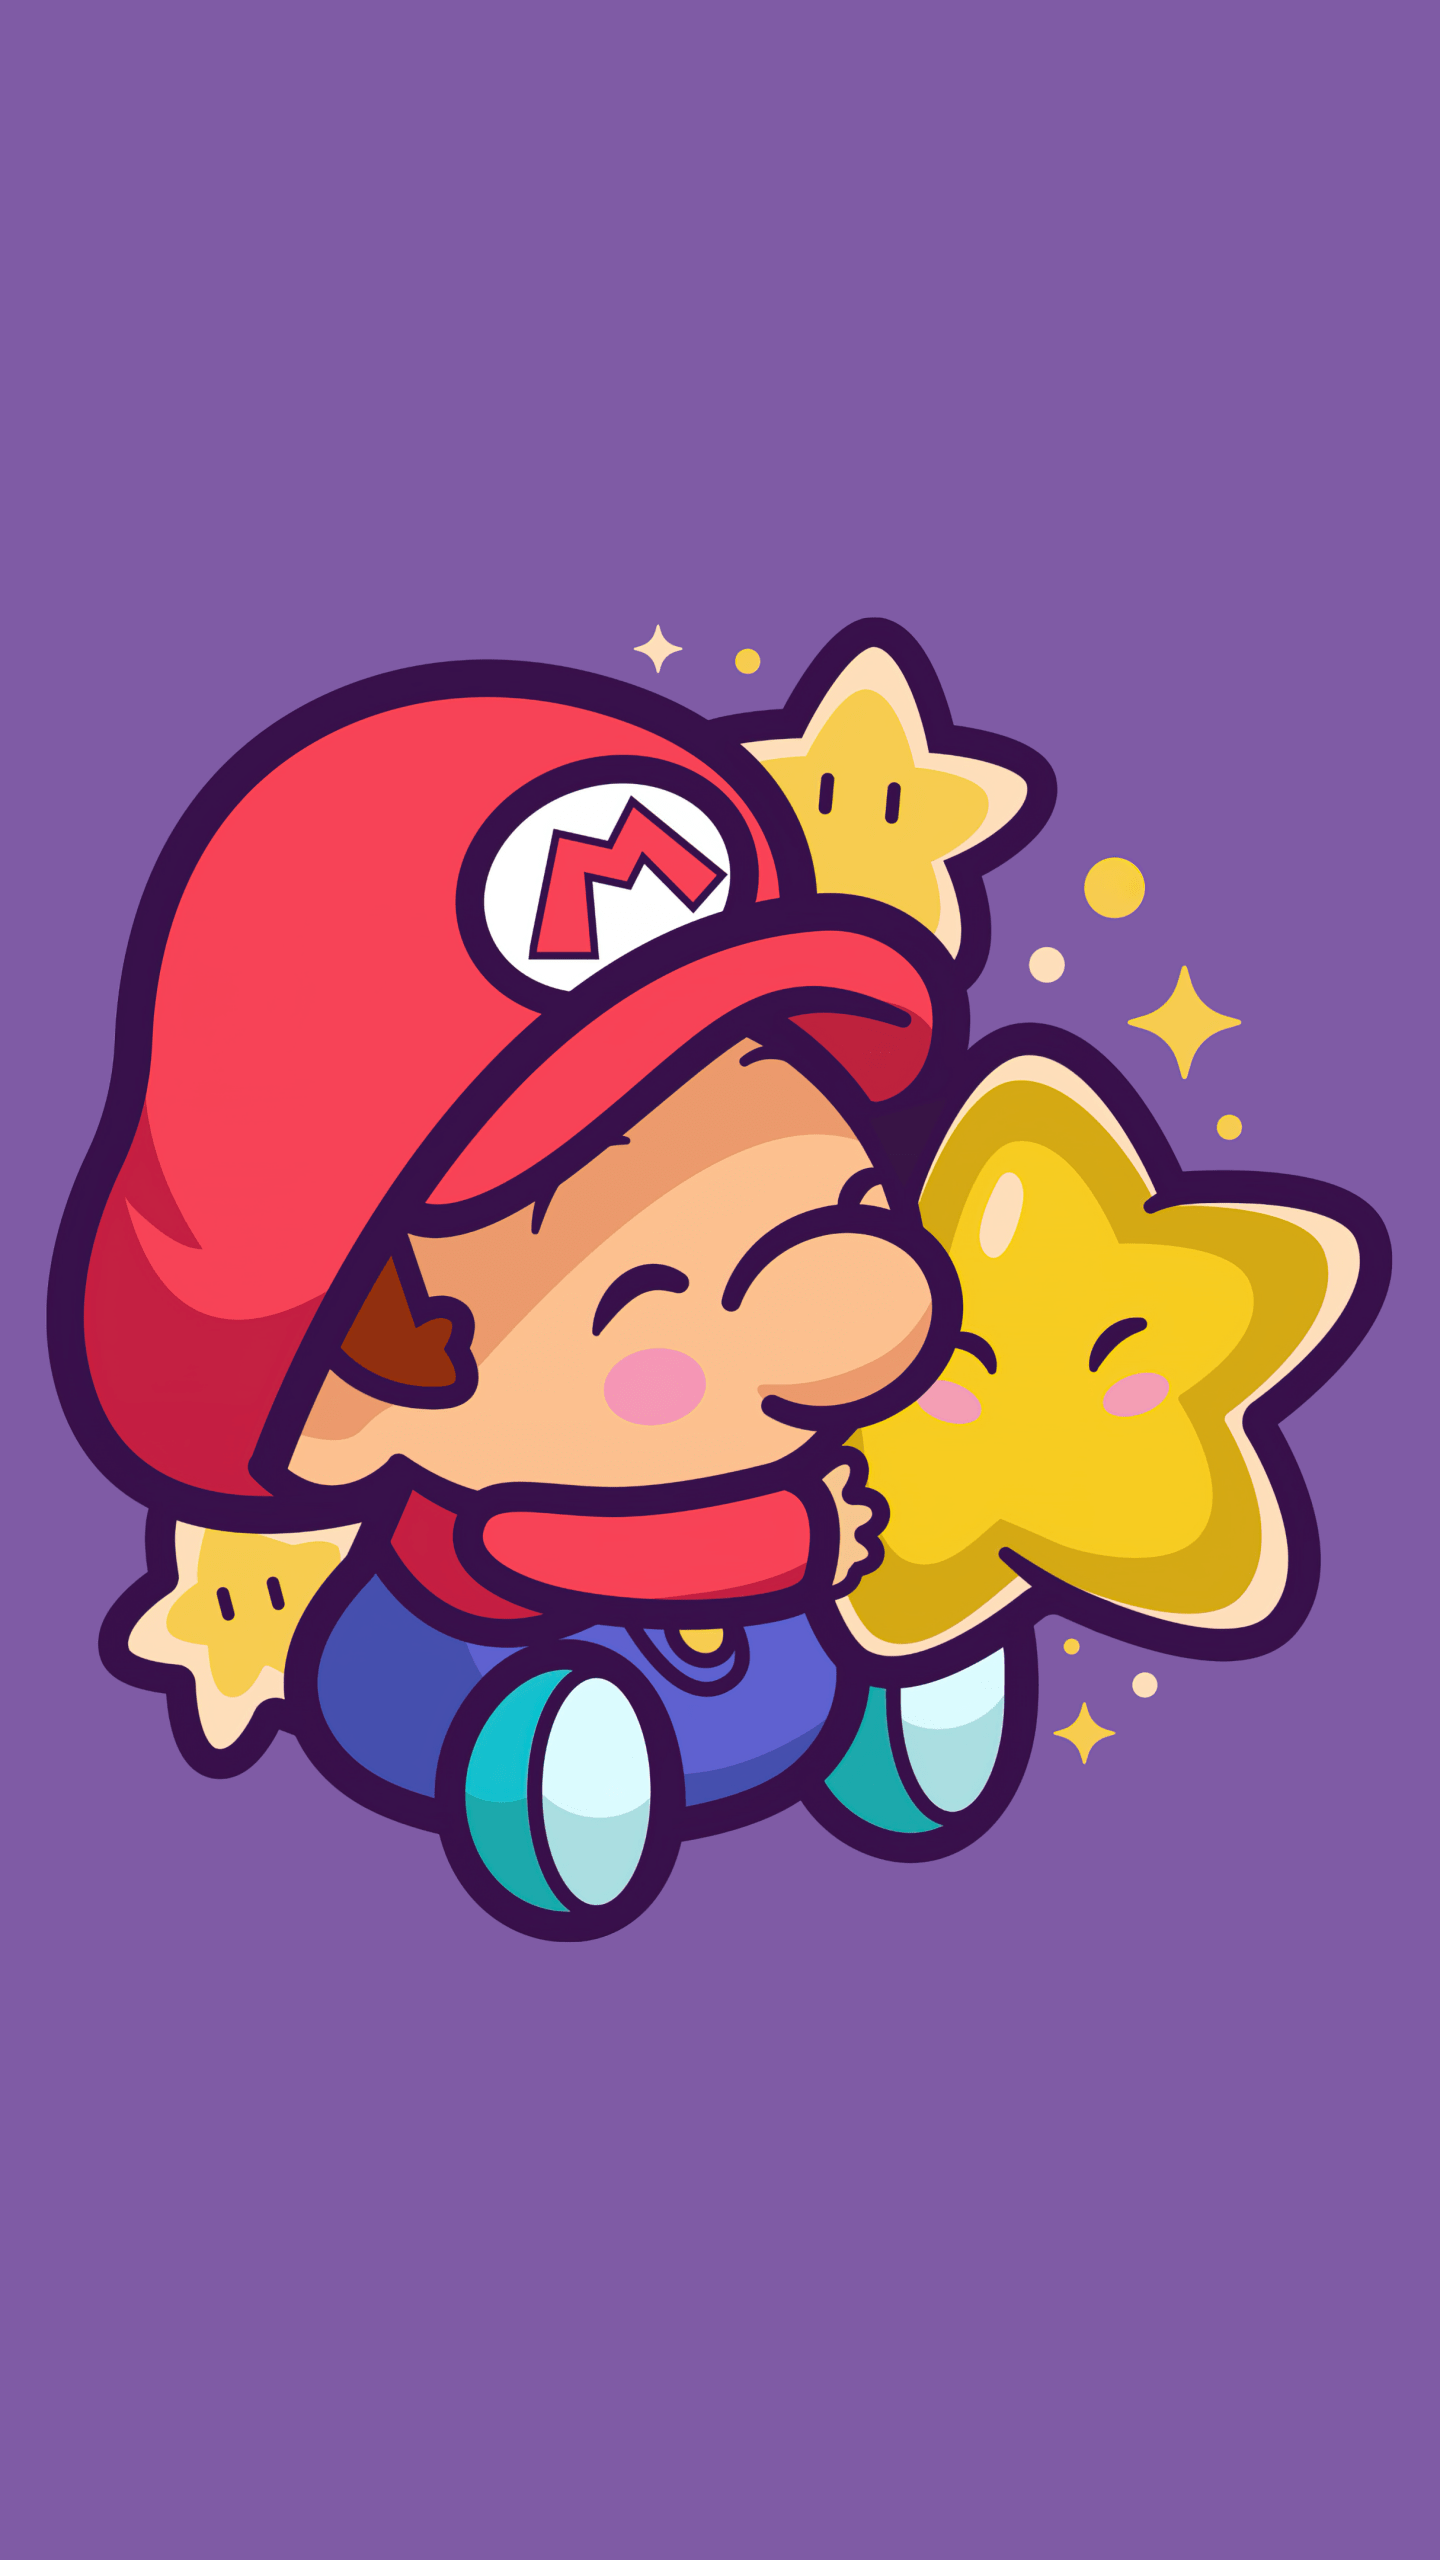 Mario with a star wallpaper - Super Mario